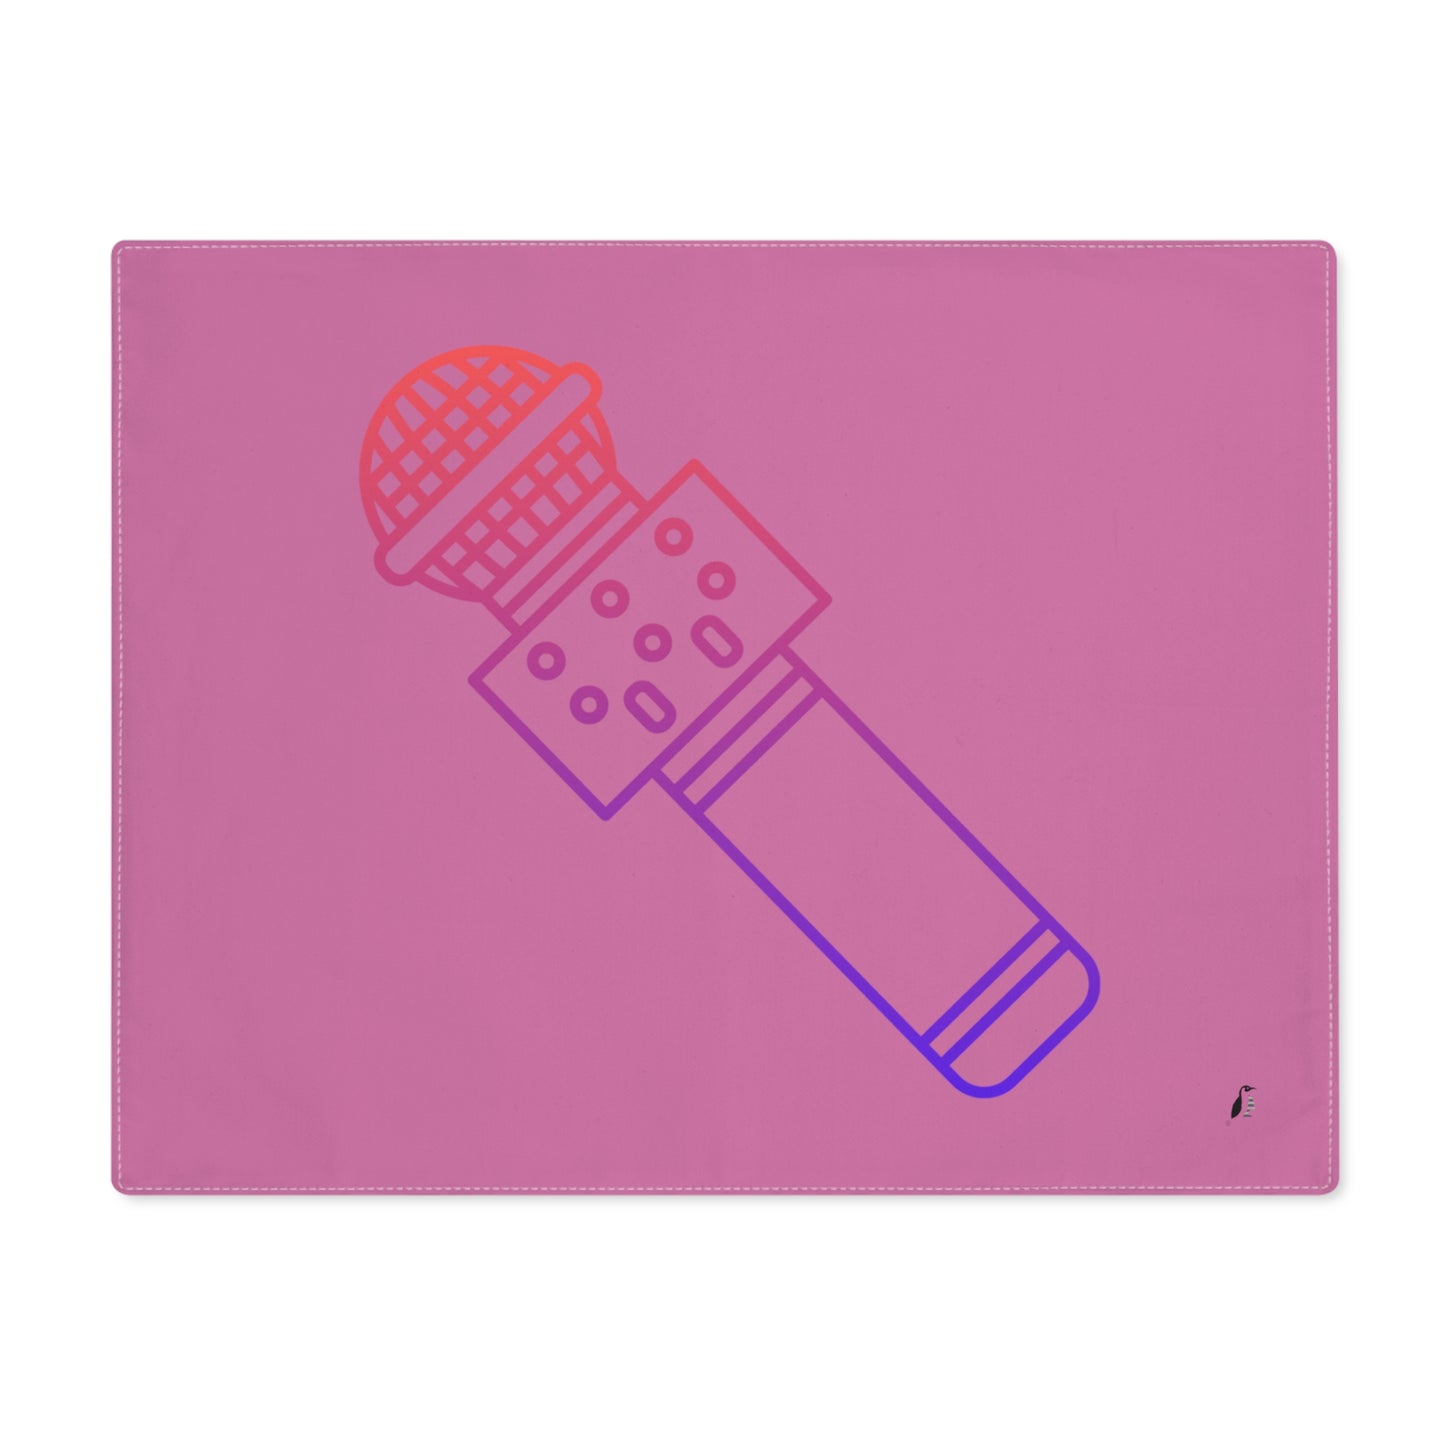 Placemat, 1pc: Music Lite Pink